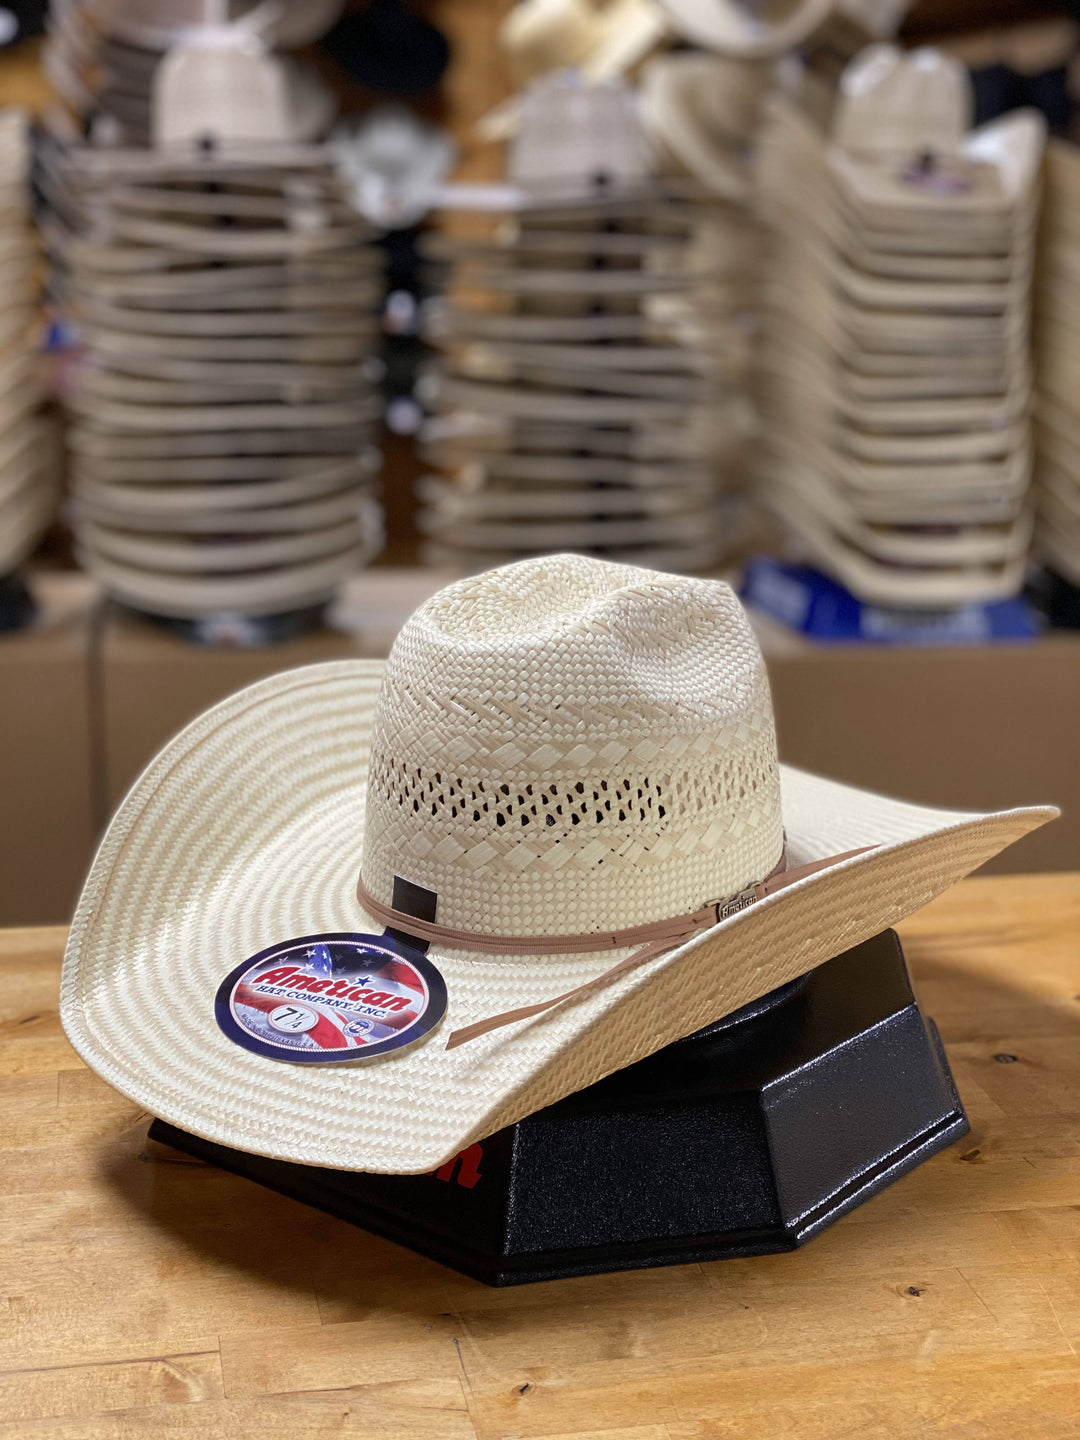 American Hat Co. 845 5" Poli Rope Cowboy Hat